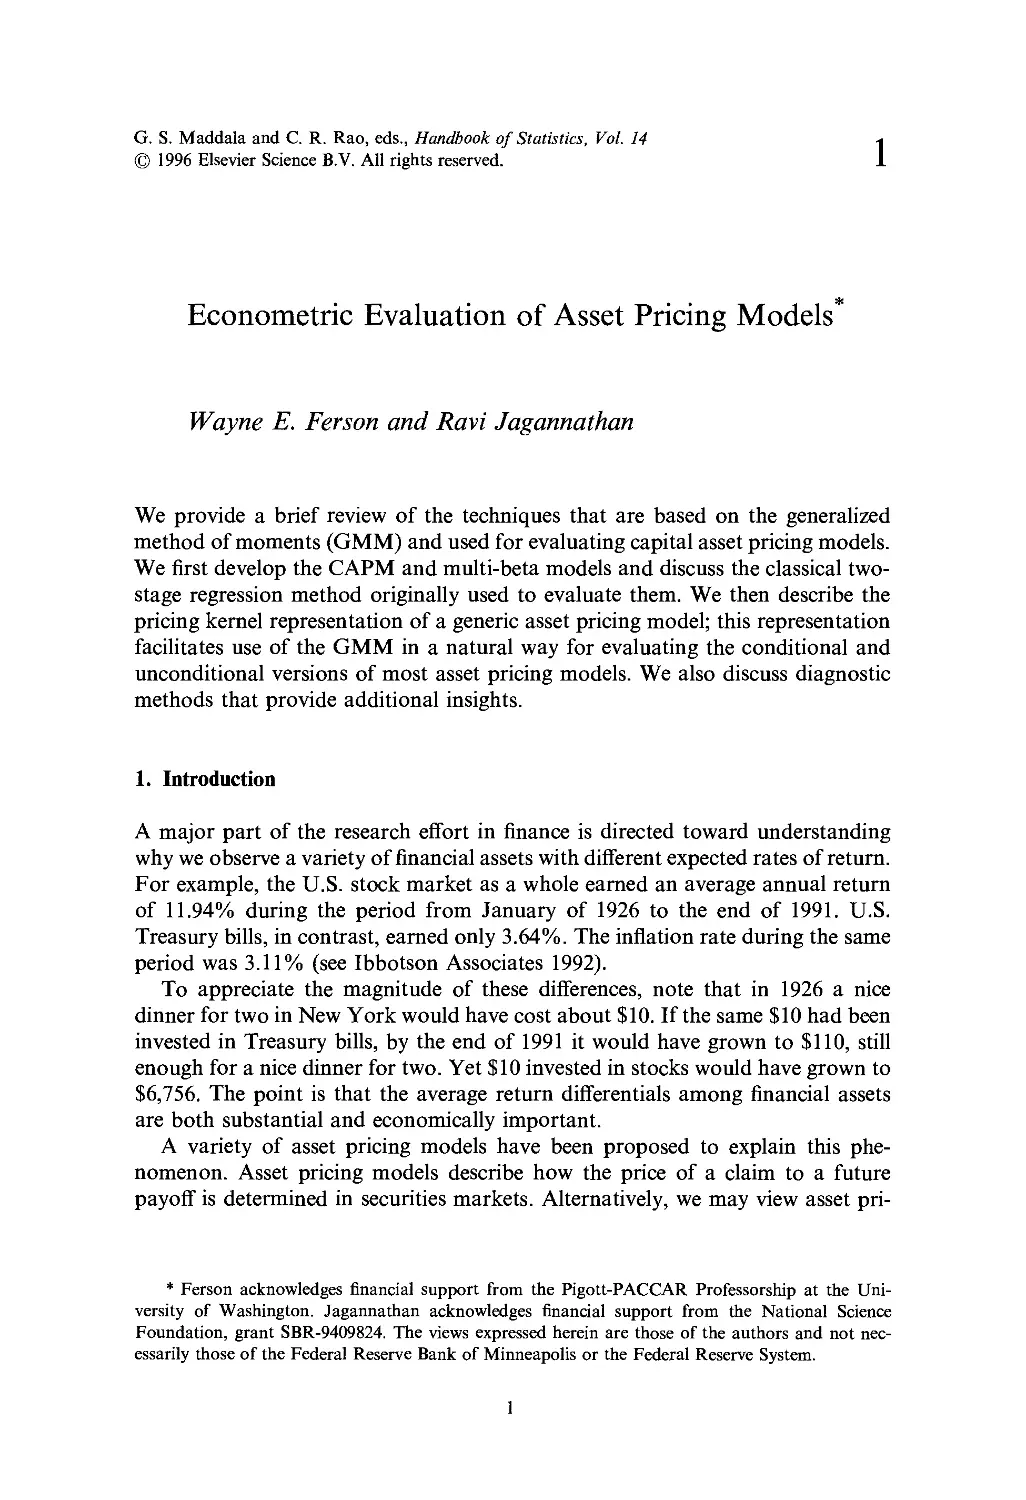 1. Econometric Evaluation of Asset Pricing Models